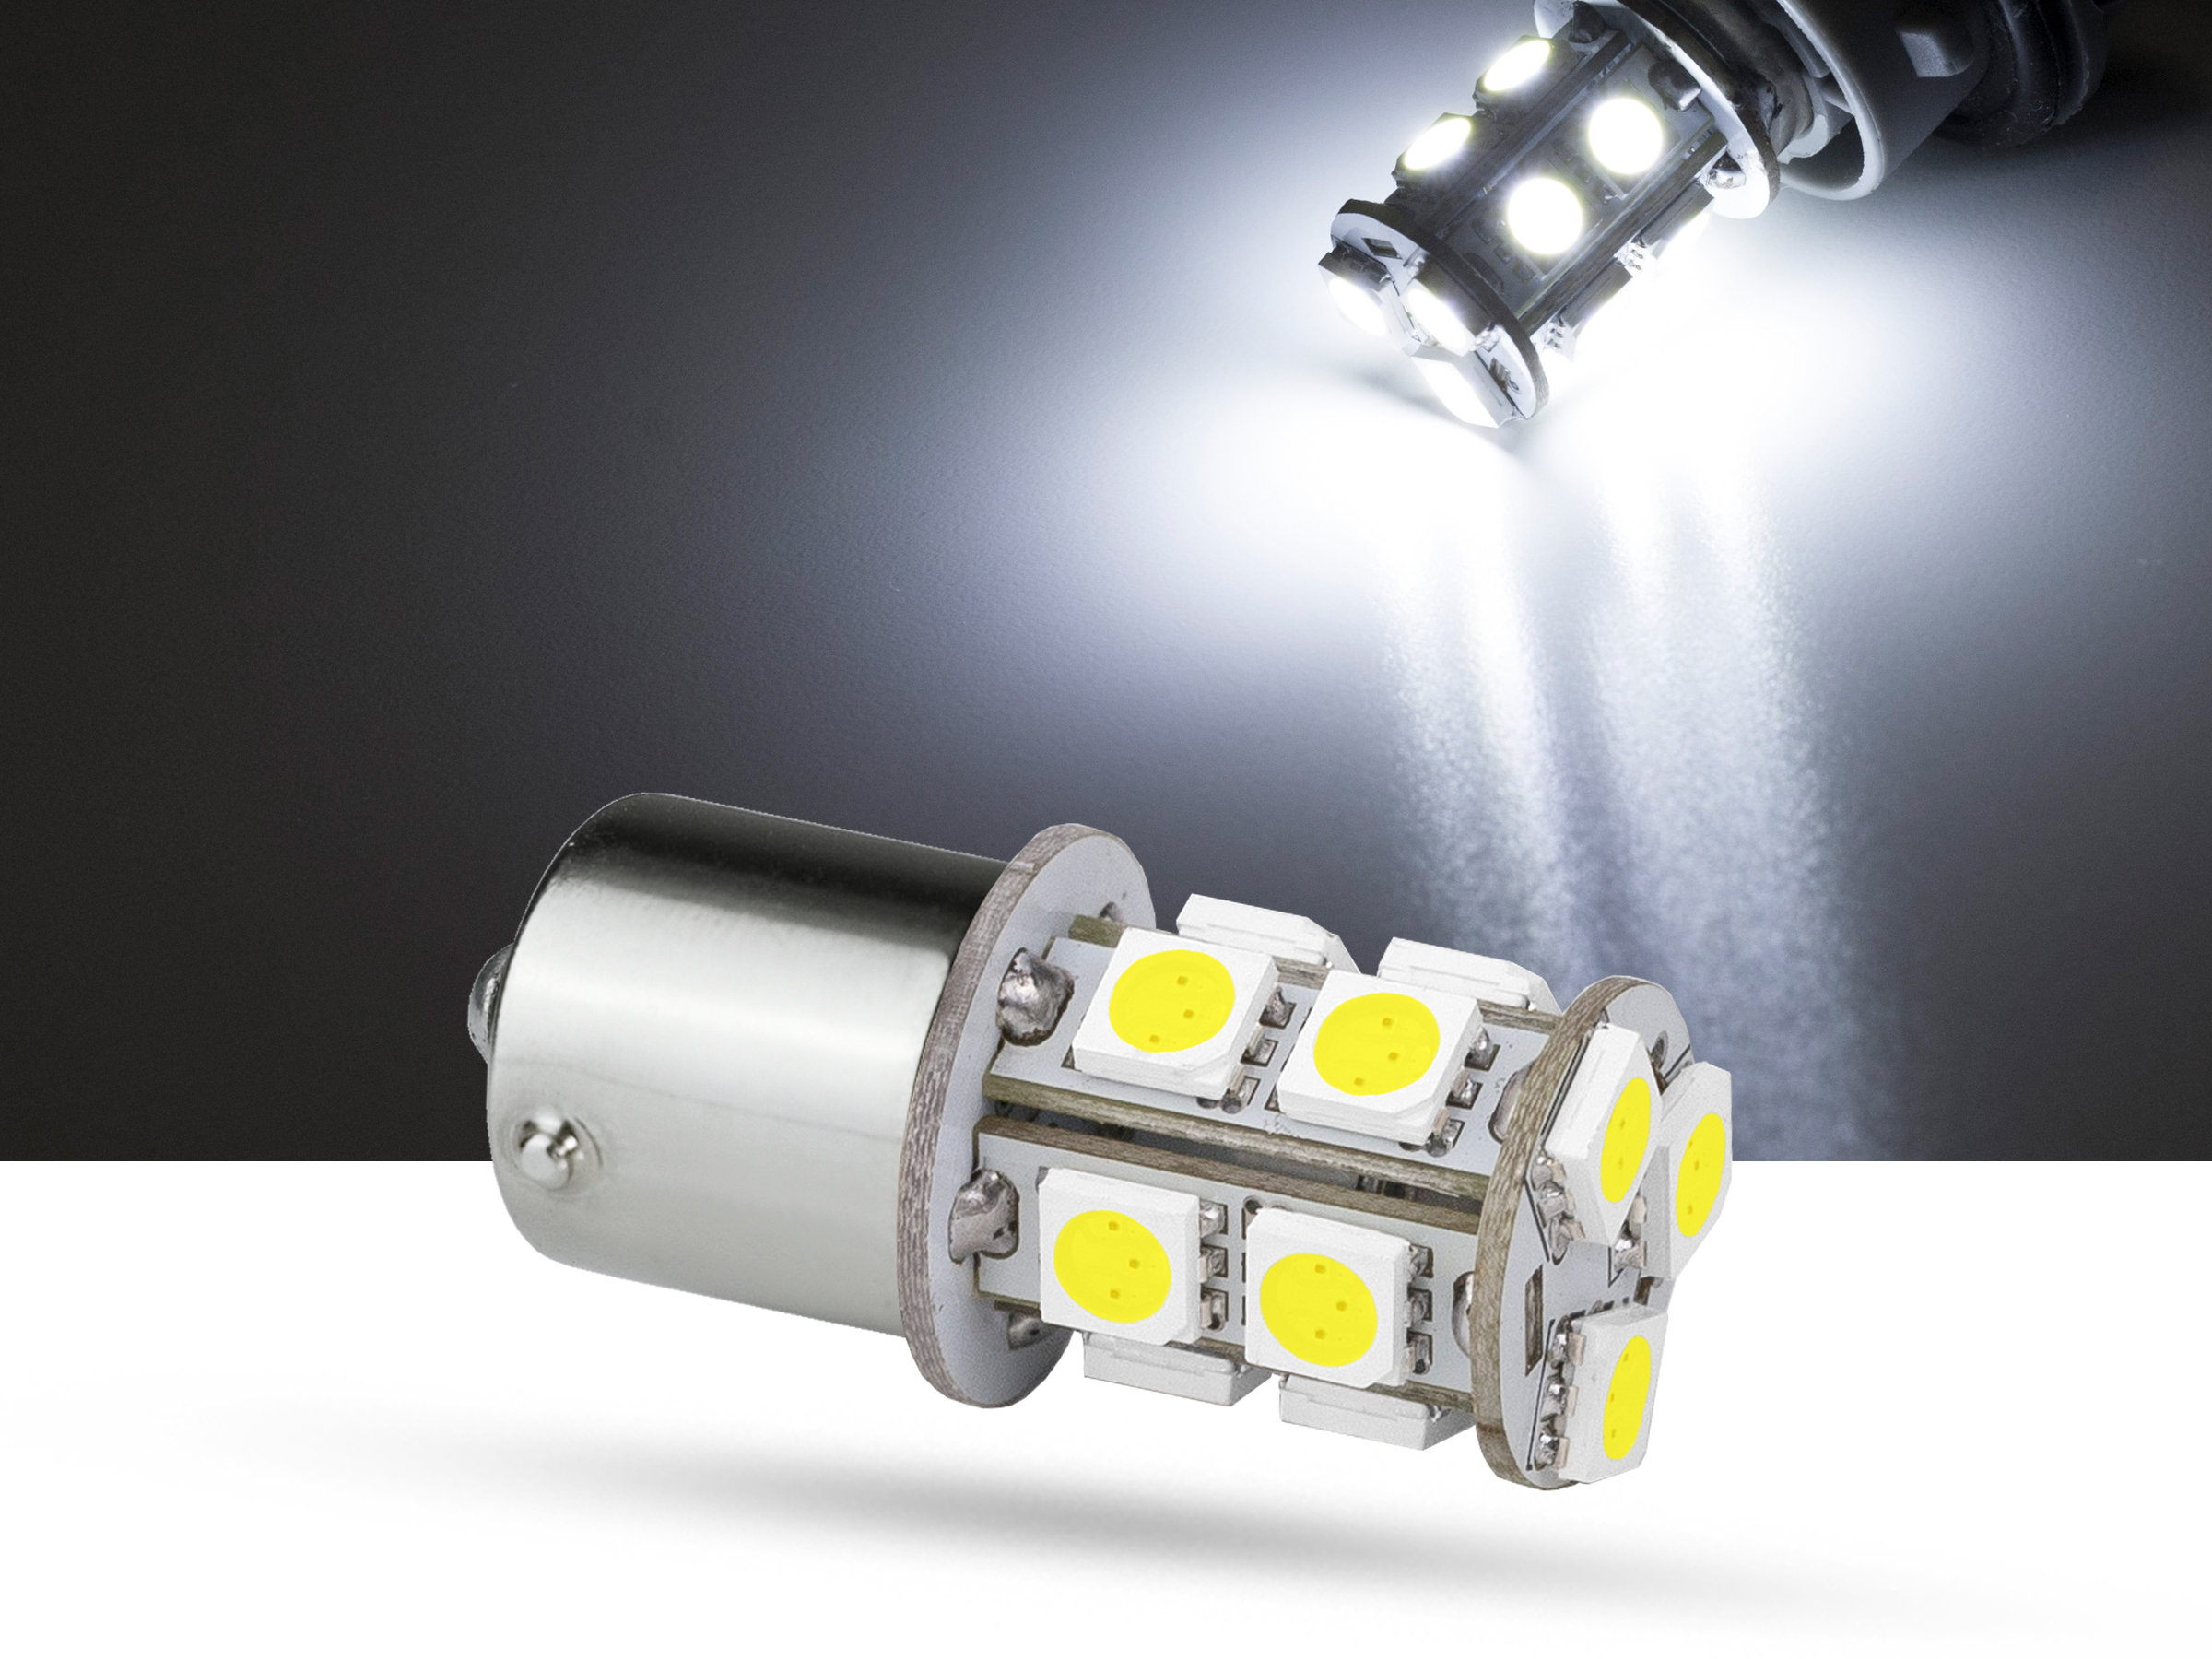 13er SMD LED Spot, BA15s, LEDR10W, weiß, 9-32 V, LED Rücklichter für 10W  BA15s R10W, LED Rücklicht, Bremslicht